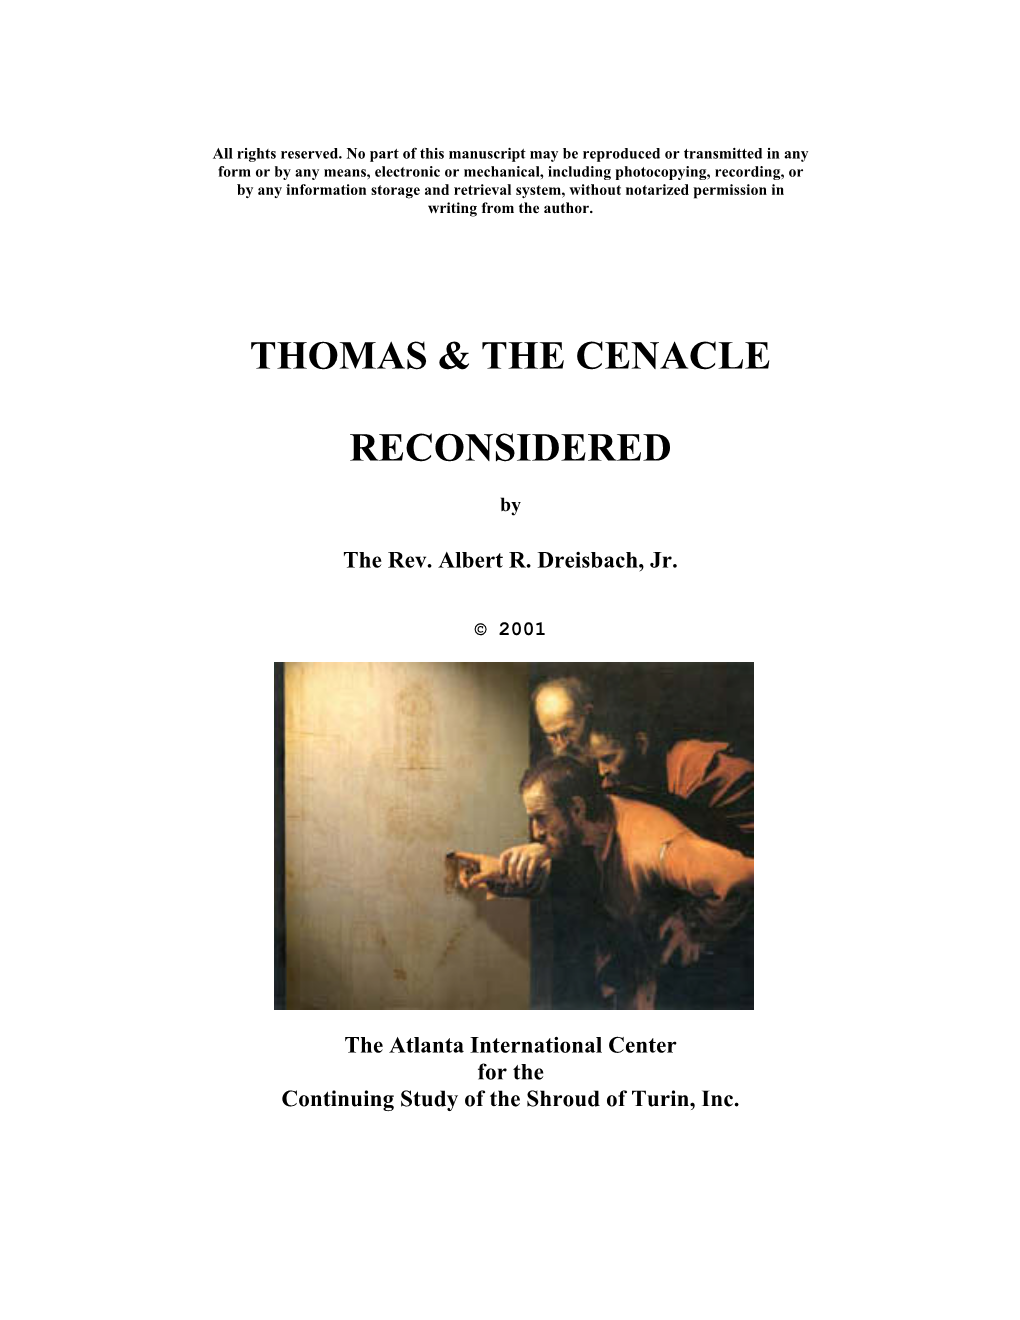 Thomas & the Cenacle